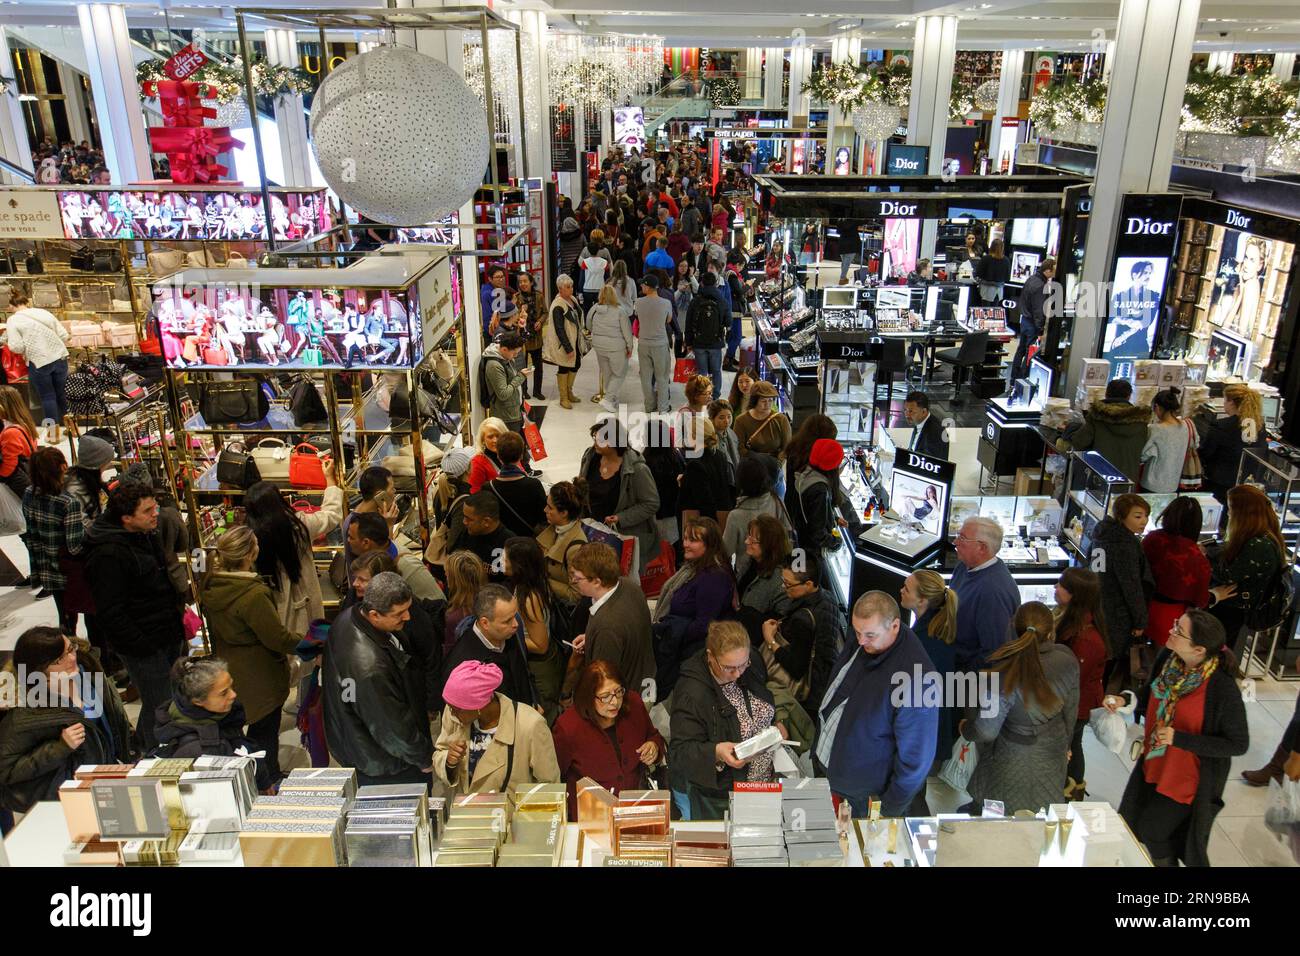 Macy's Labor Day Sale  The Mall at Greece Ridge